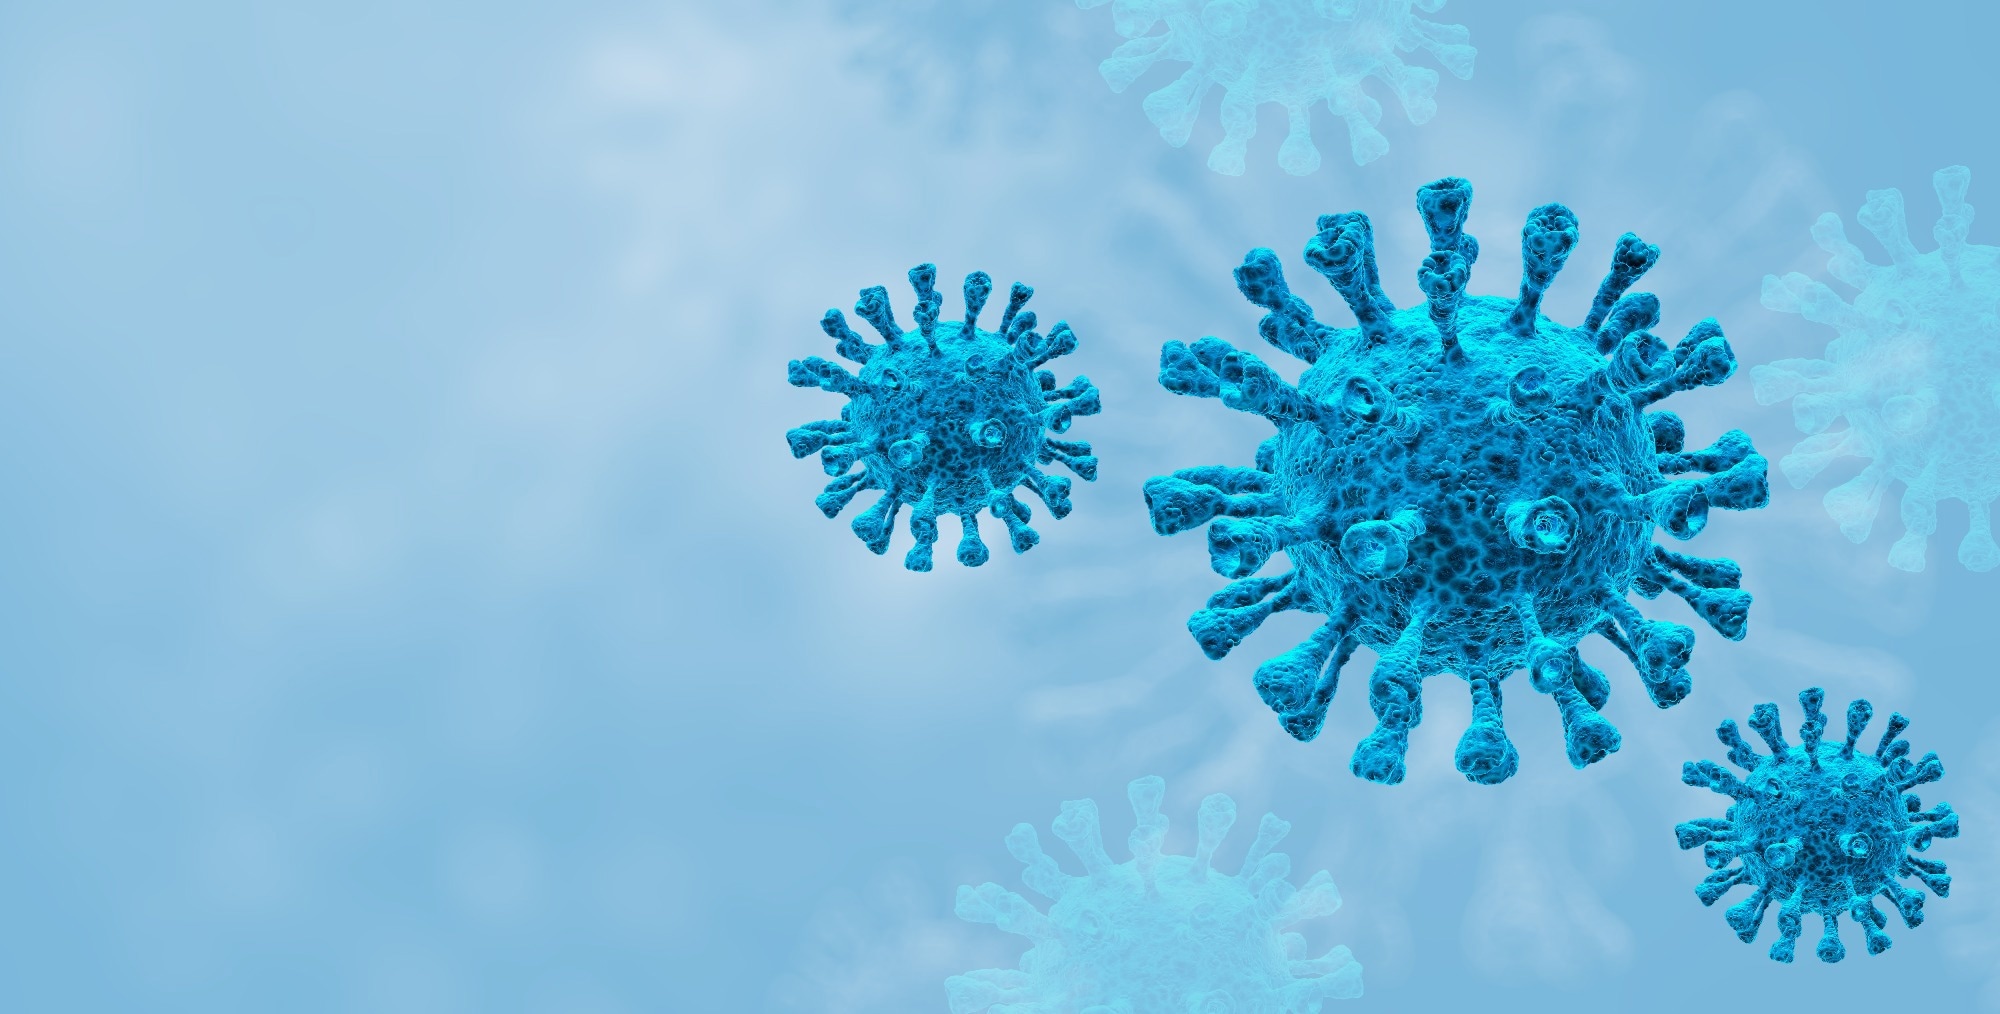 Study: Cyclophilin A-mediated mitigation of coronavirus SARS-CoV-2. Image Credit: SWKStock/Shutterstock